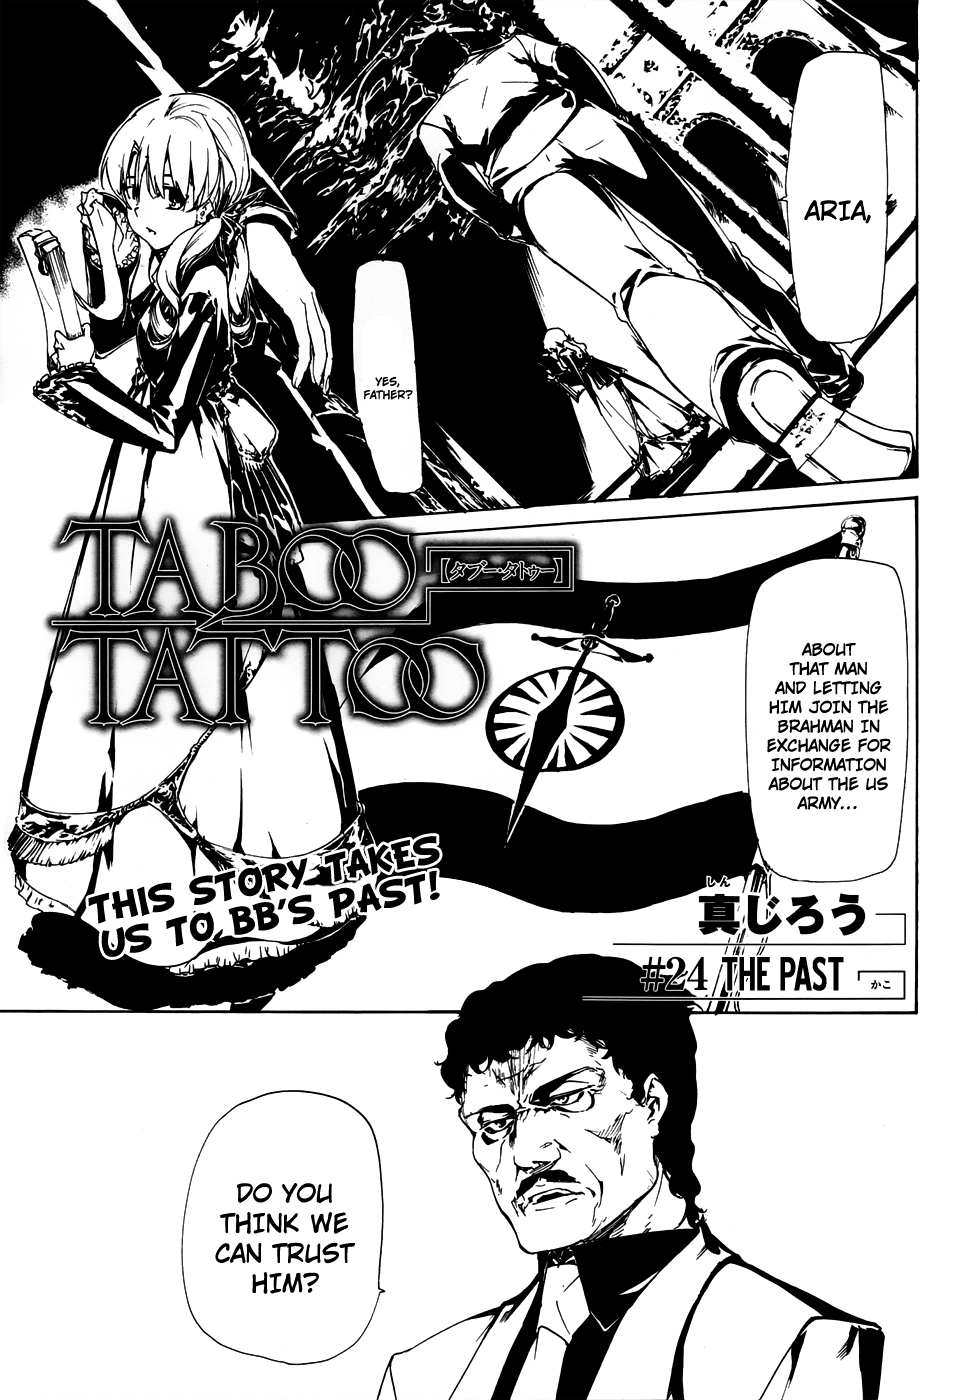 Taboo Tattoo Chapter 24 The Past Mangahasu